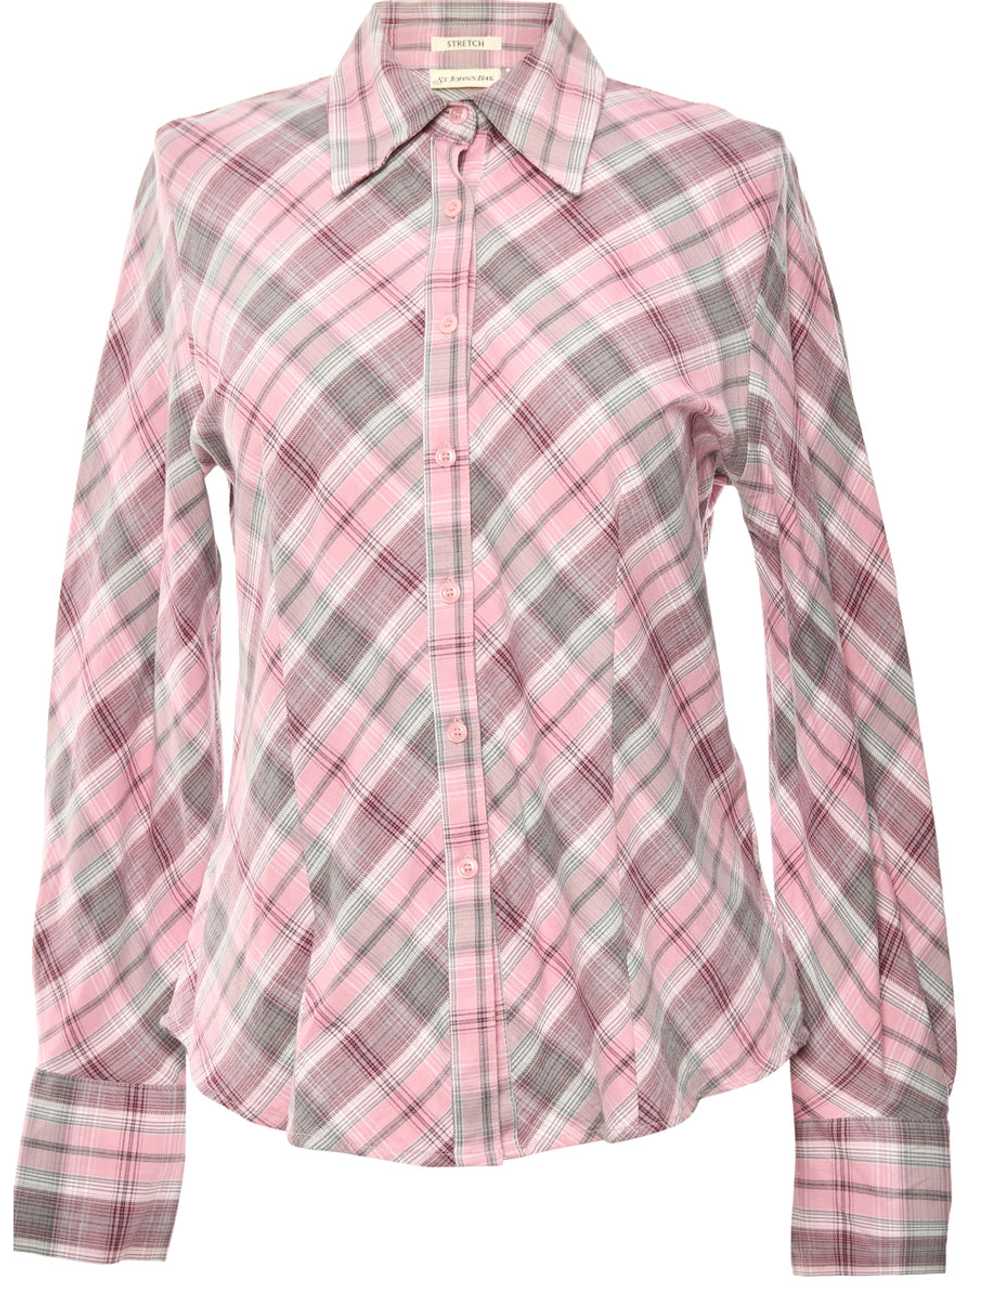 Checked Pink Shirt - M - image 1